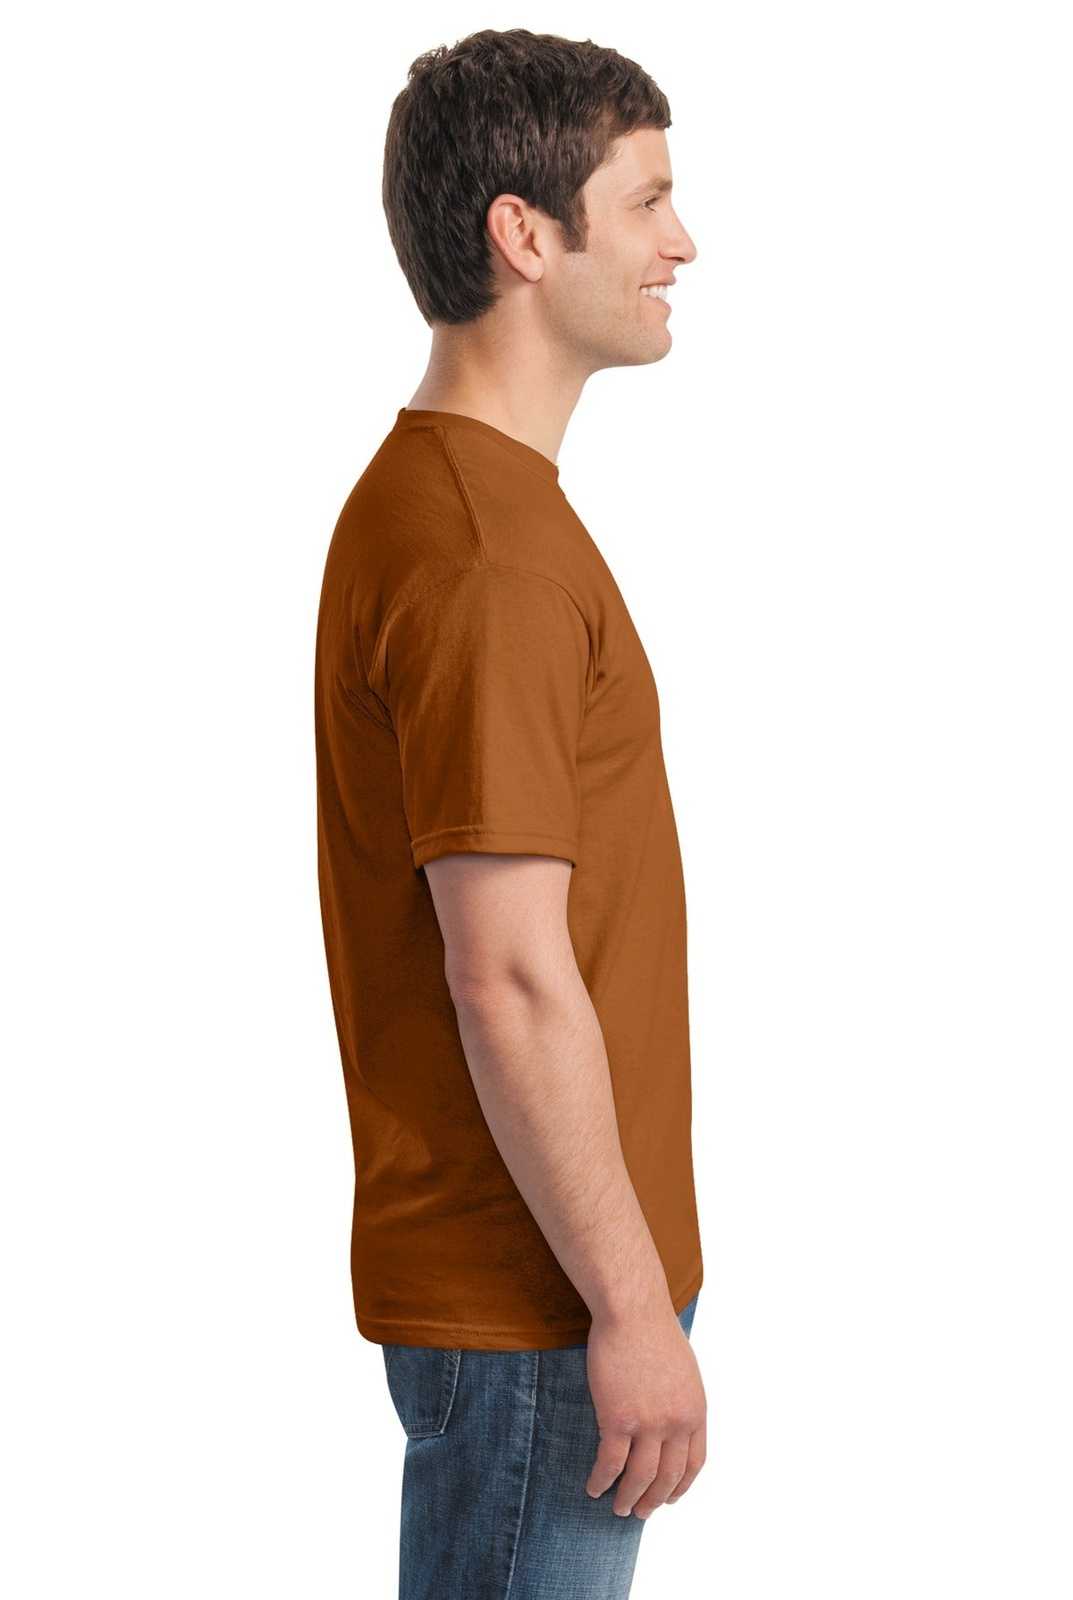 Gildan 5000 Heavy Cotton 100% Cotton T-Shirt - Texas Orange - HIT a Double